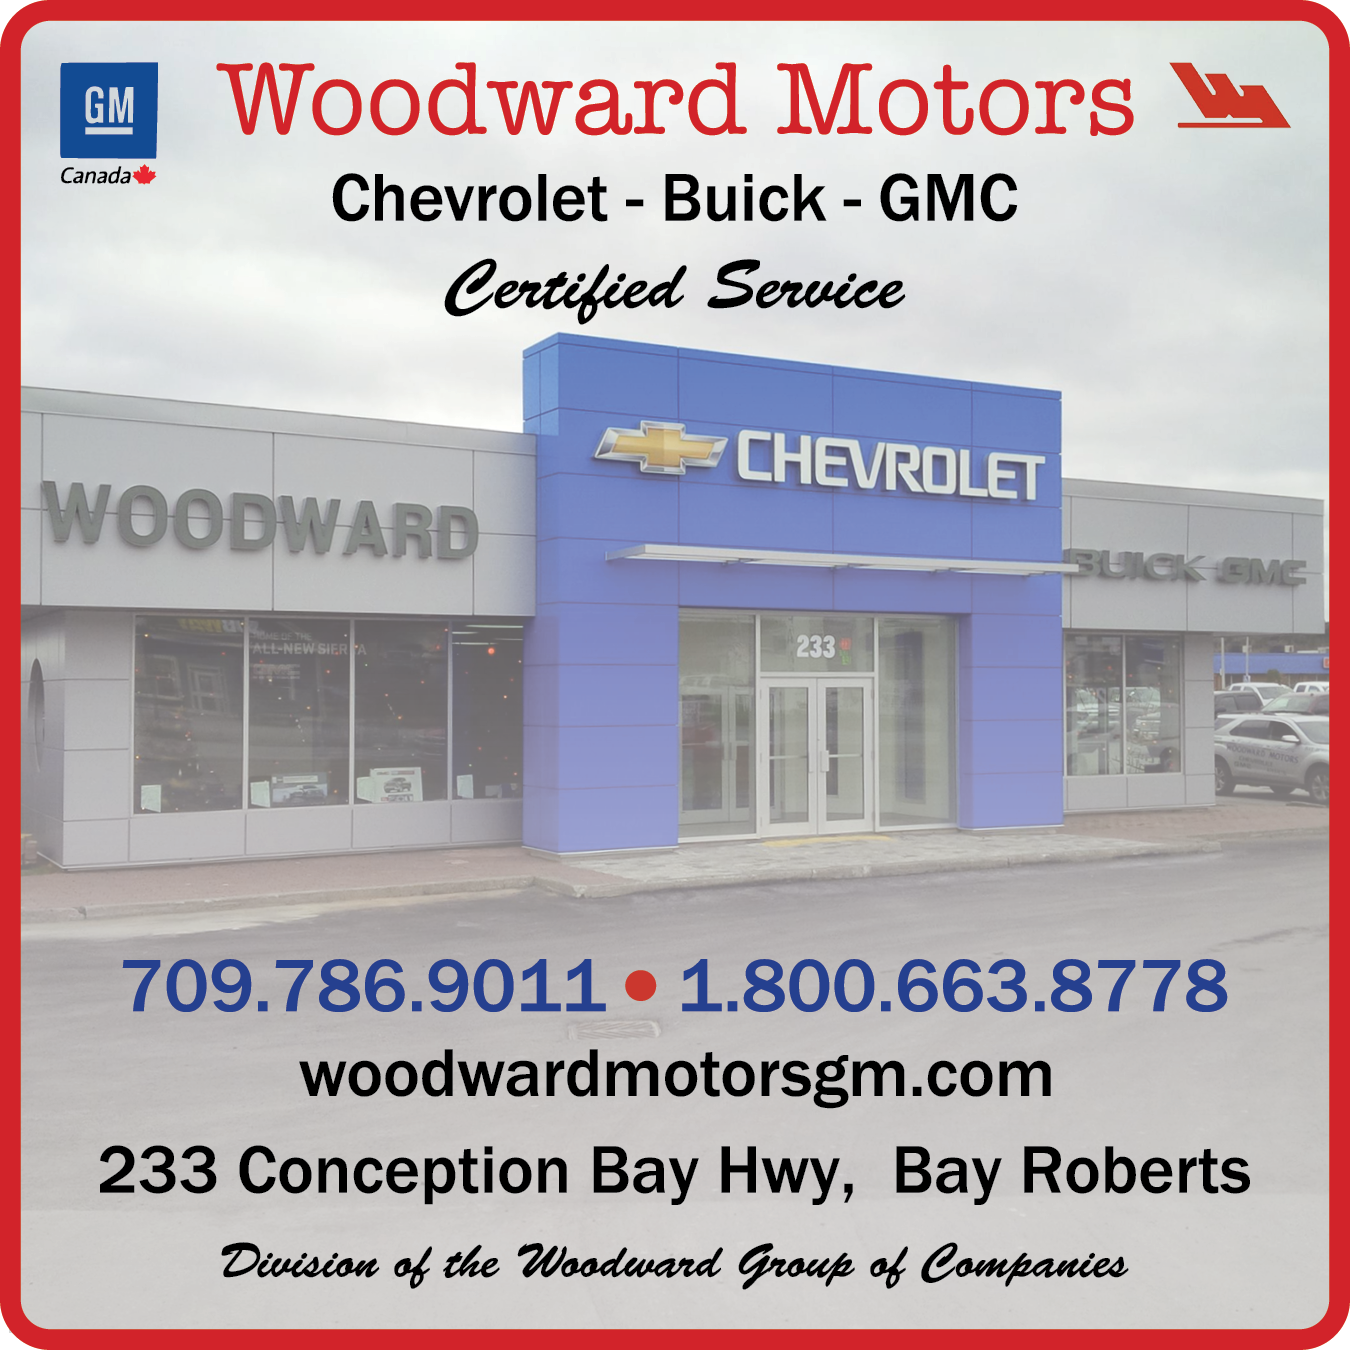 Woodward Motors